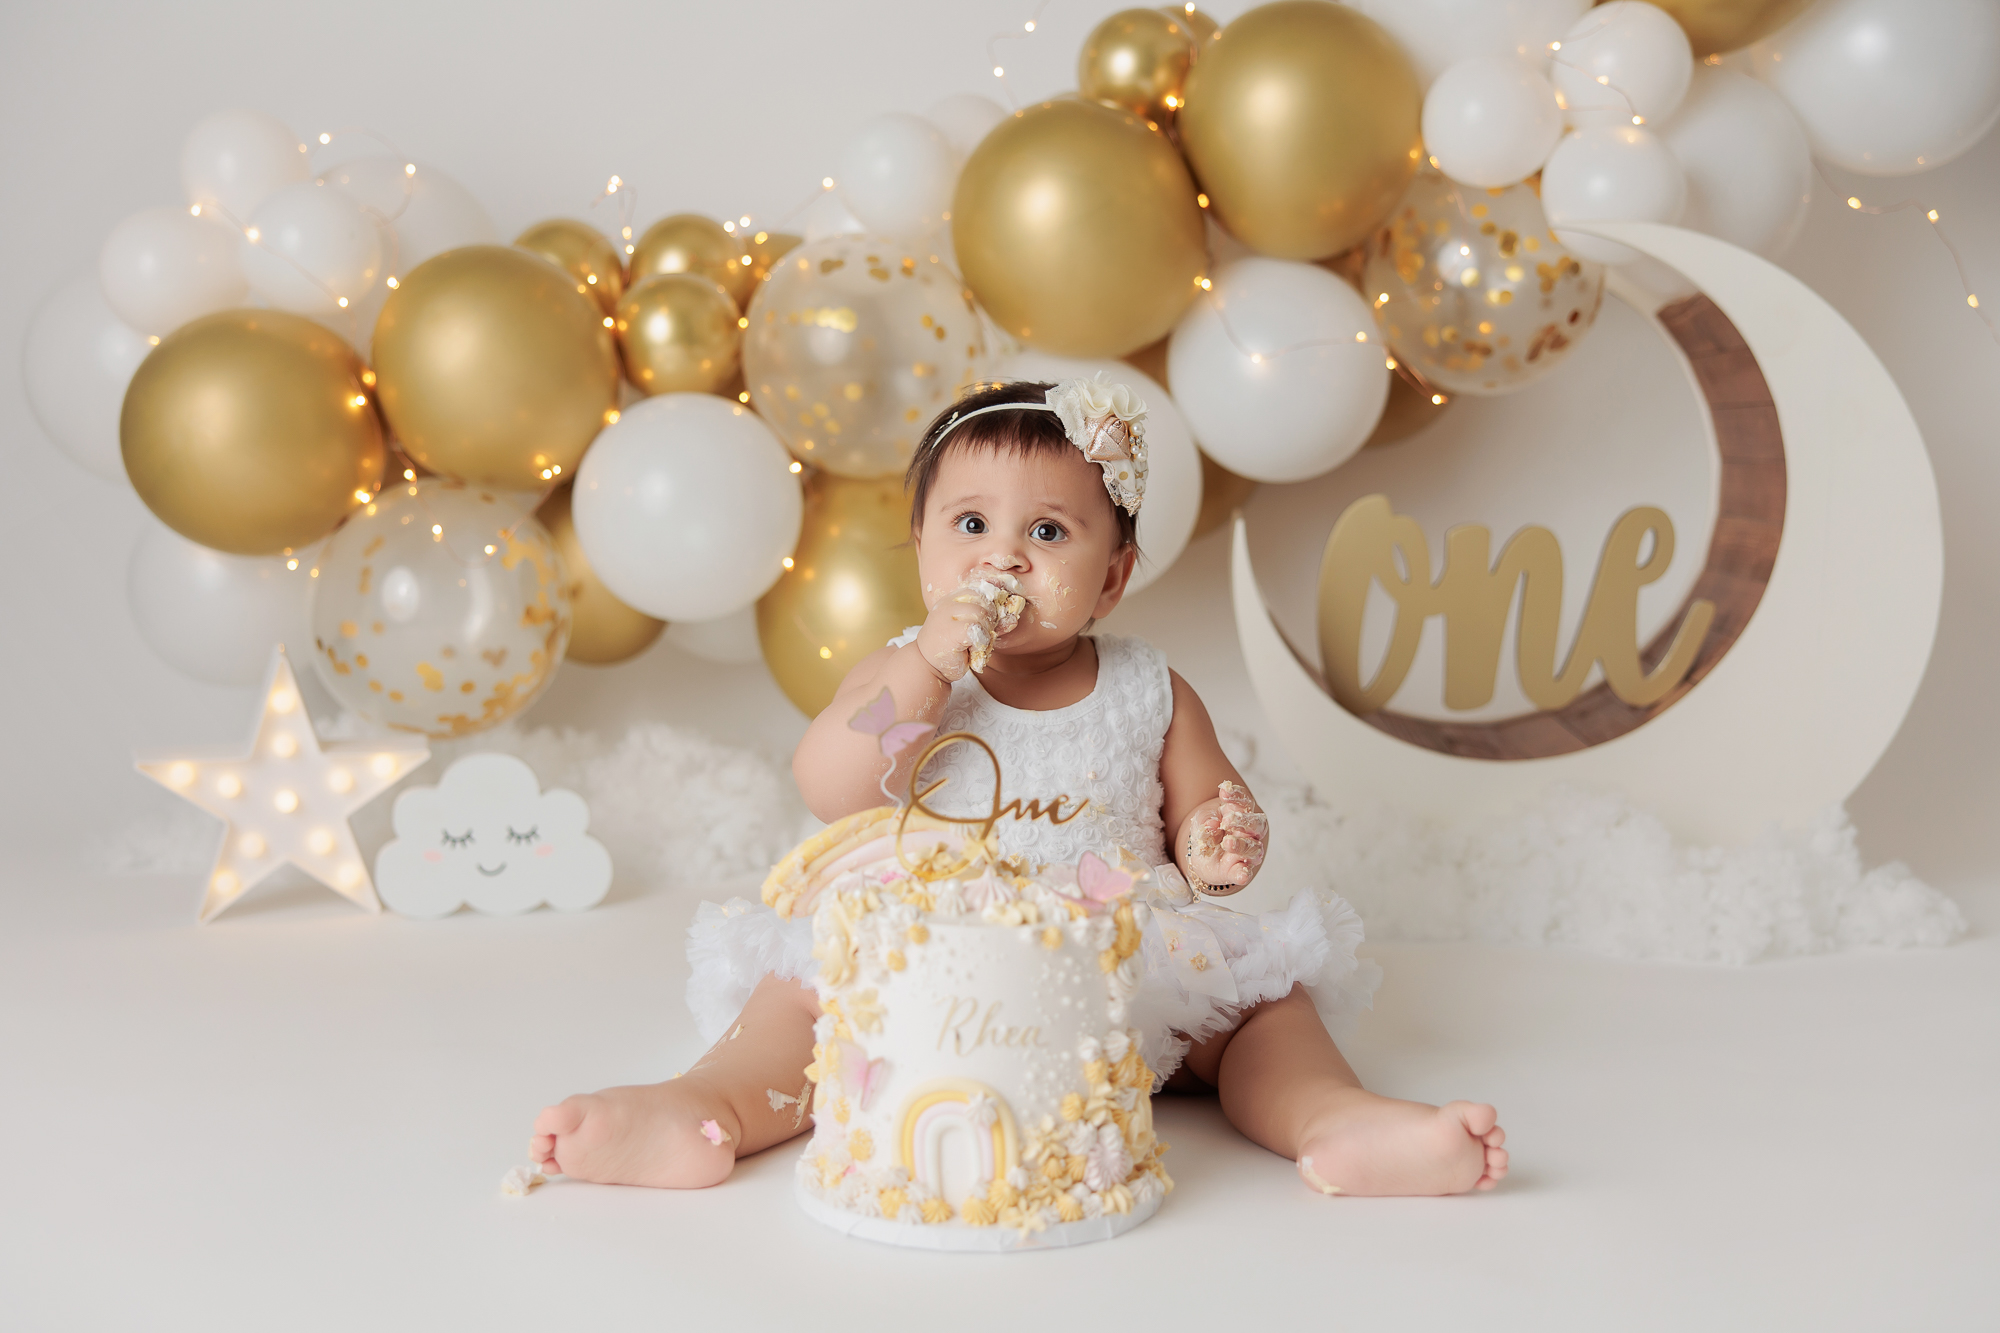 amanda dams photography cake smash photography calgary white and gold balloon garland